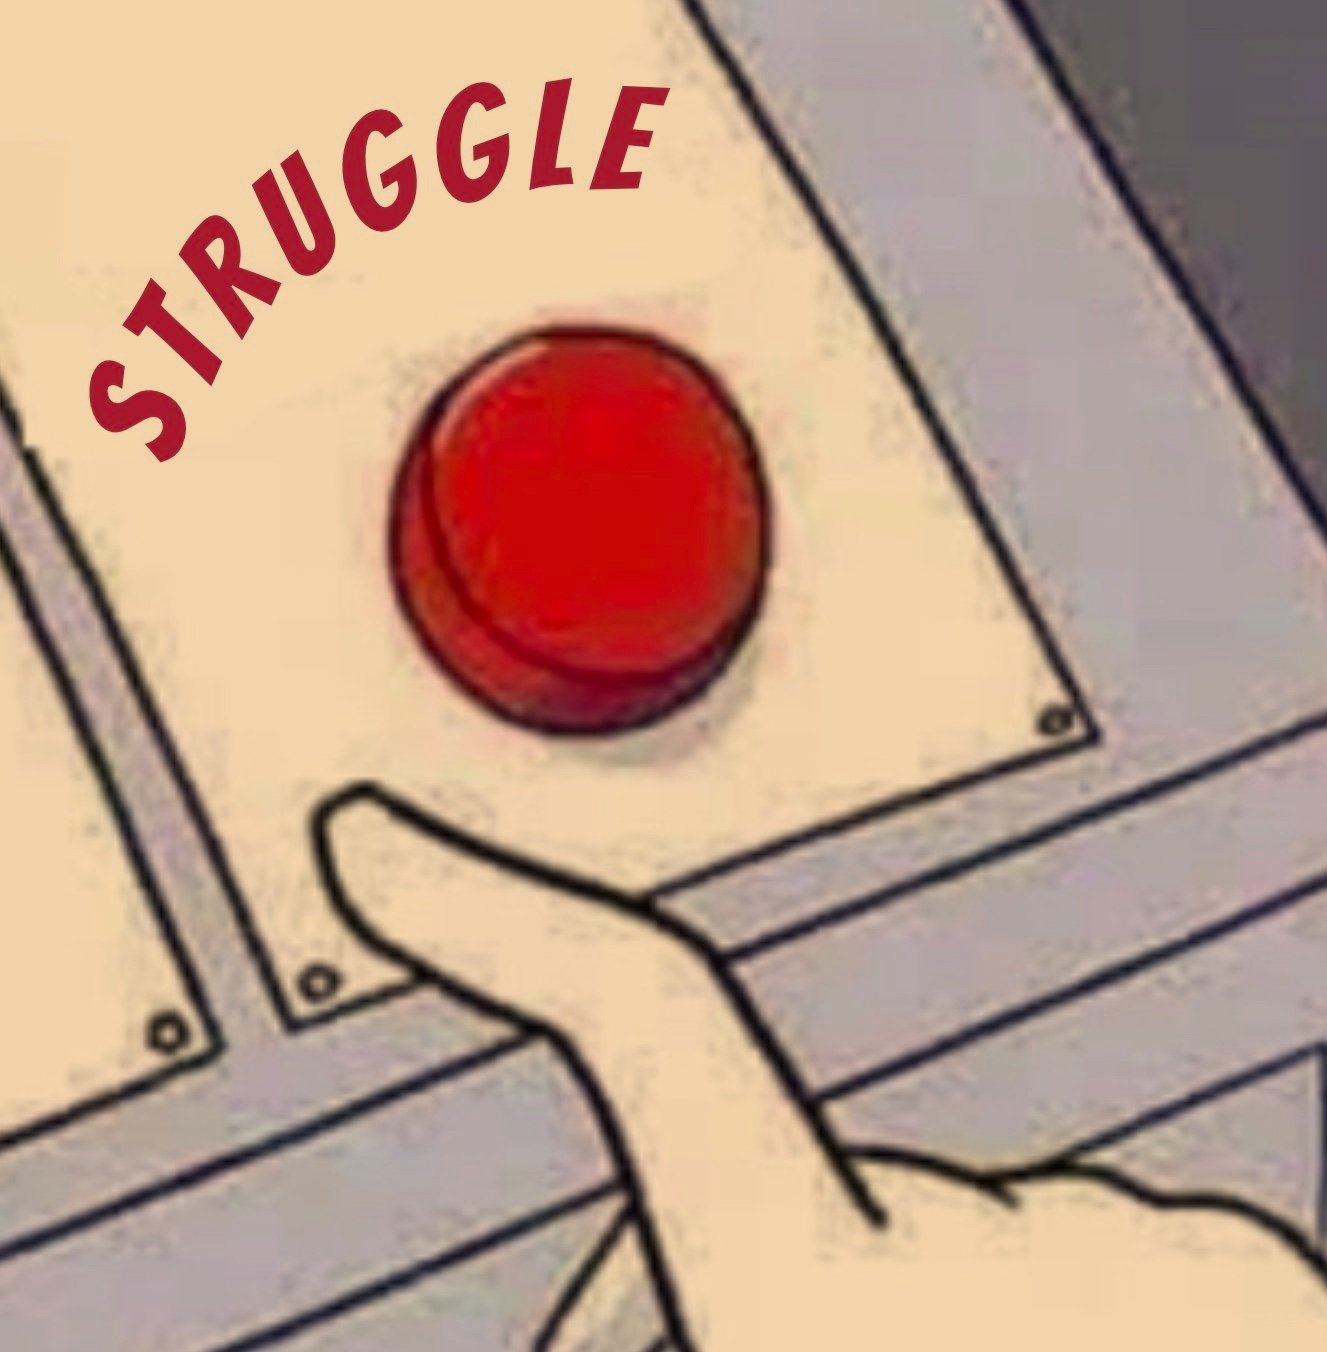 The Struggle Button = Contrafreeloading